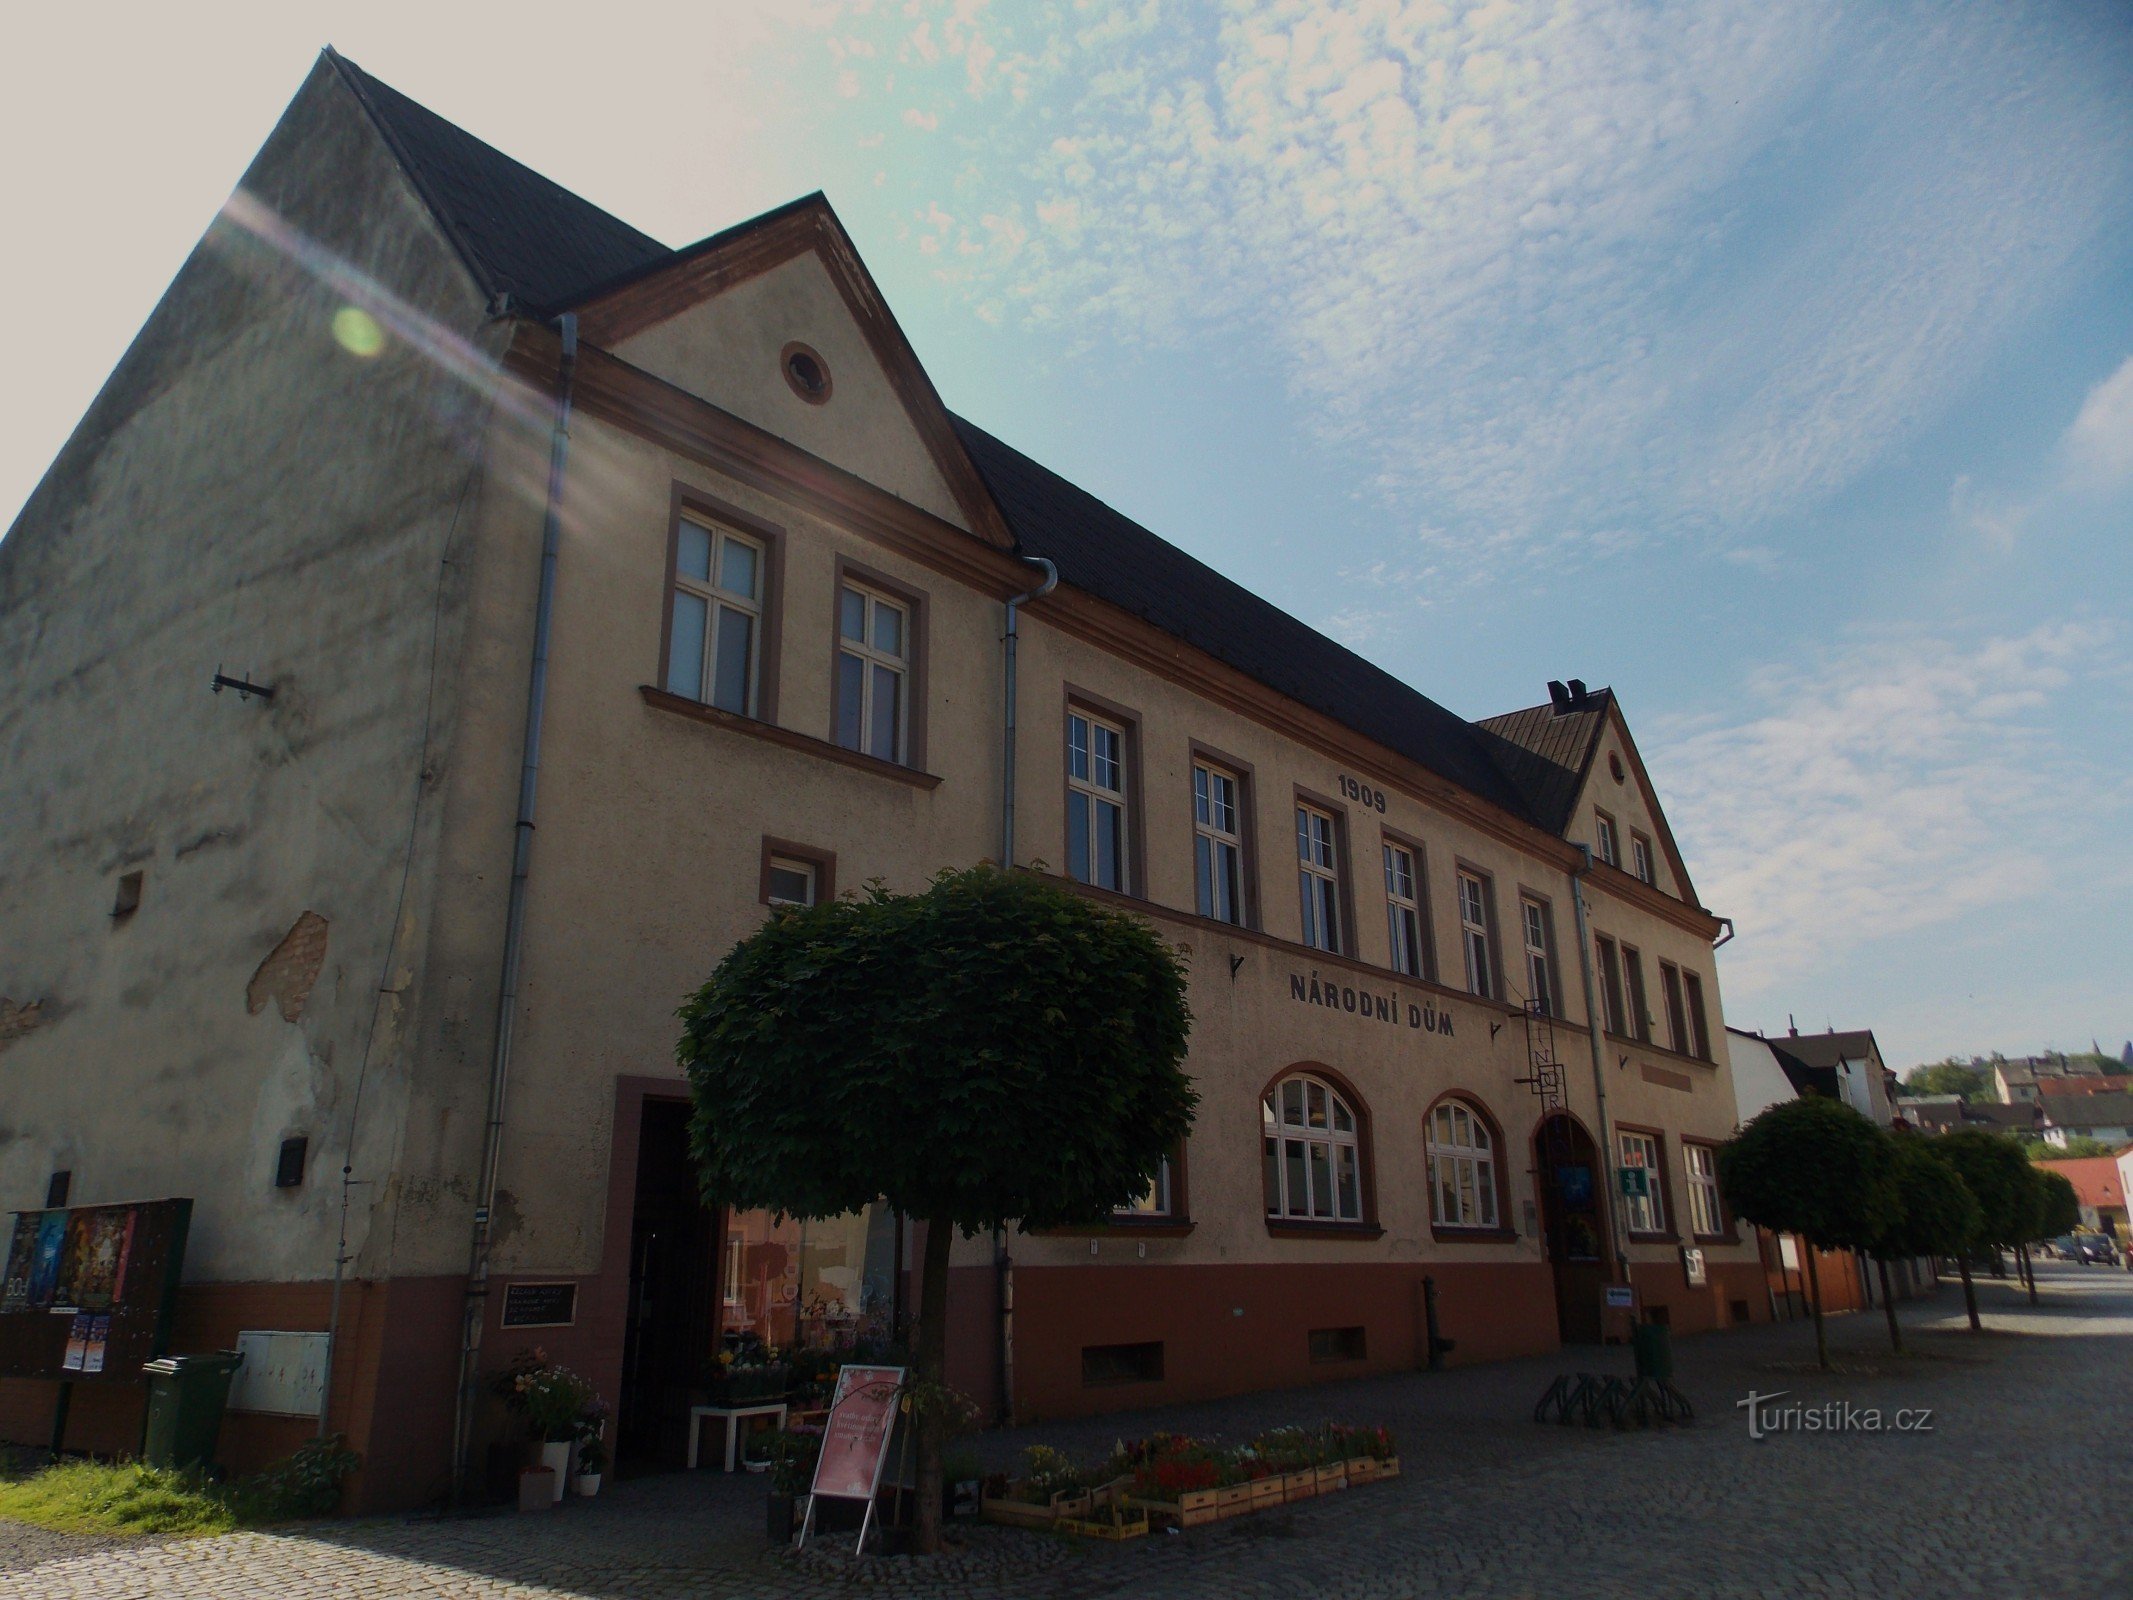 Casa Nacional Histórica en Hradec nad Moravicí